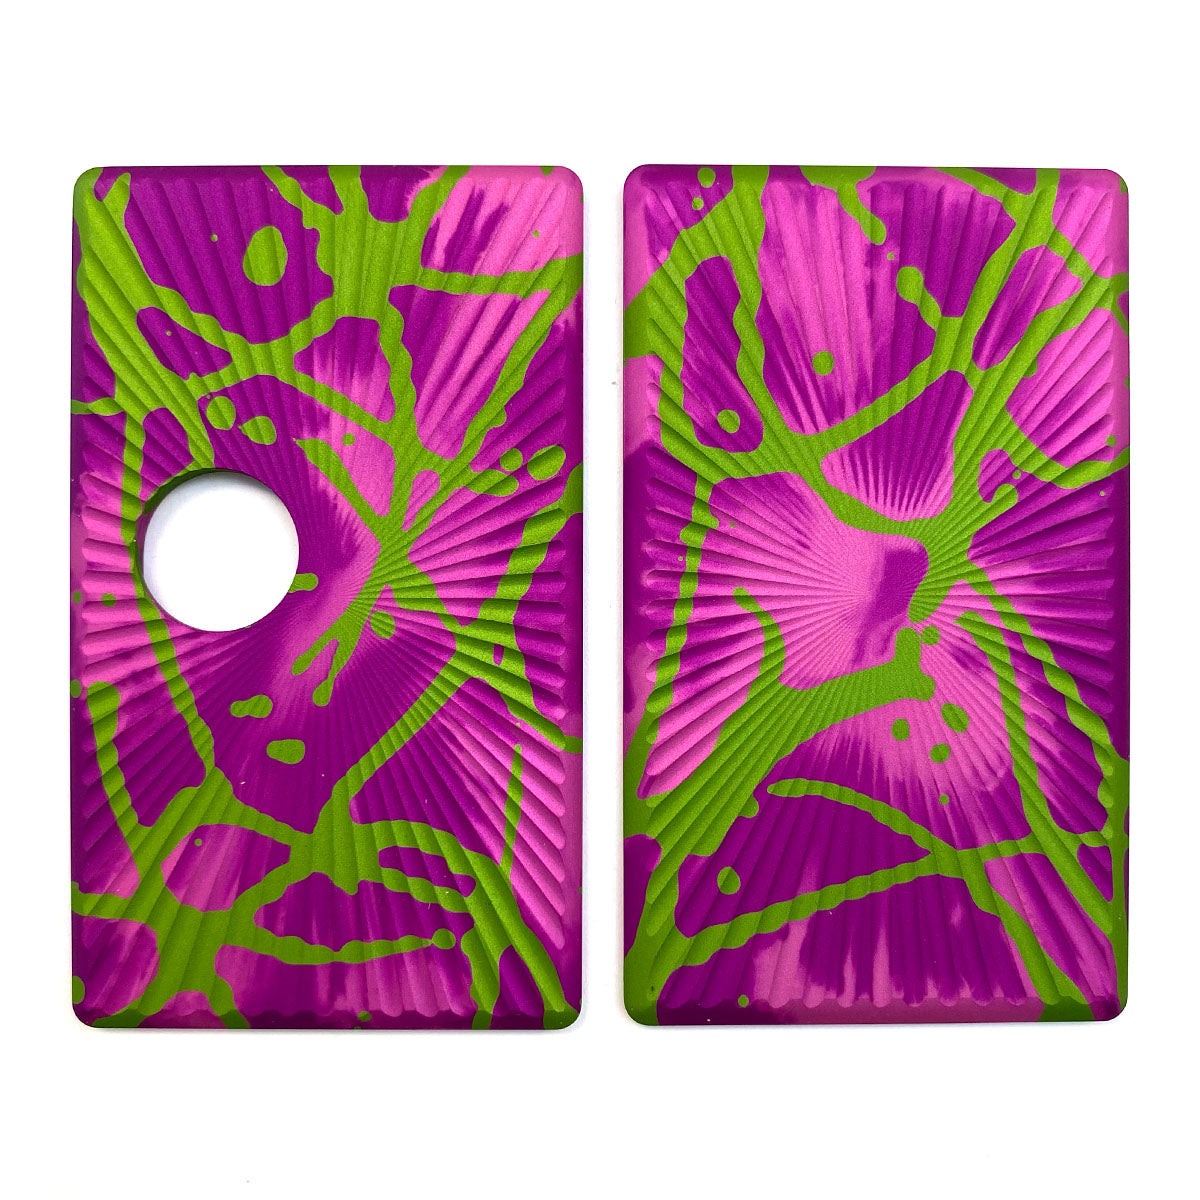 Billet Box Aluminium Panels - Star Burst - Pink Acid Wash/Lime Splatter